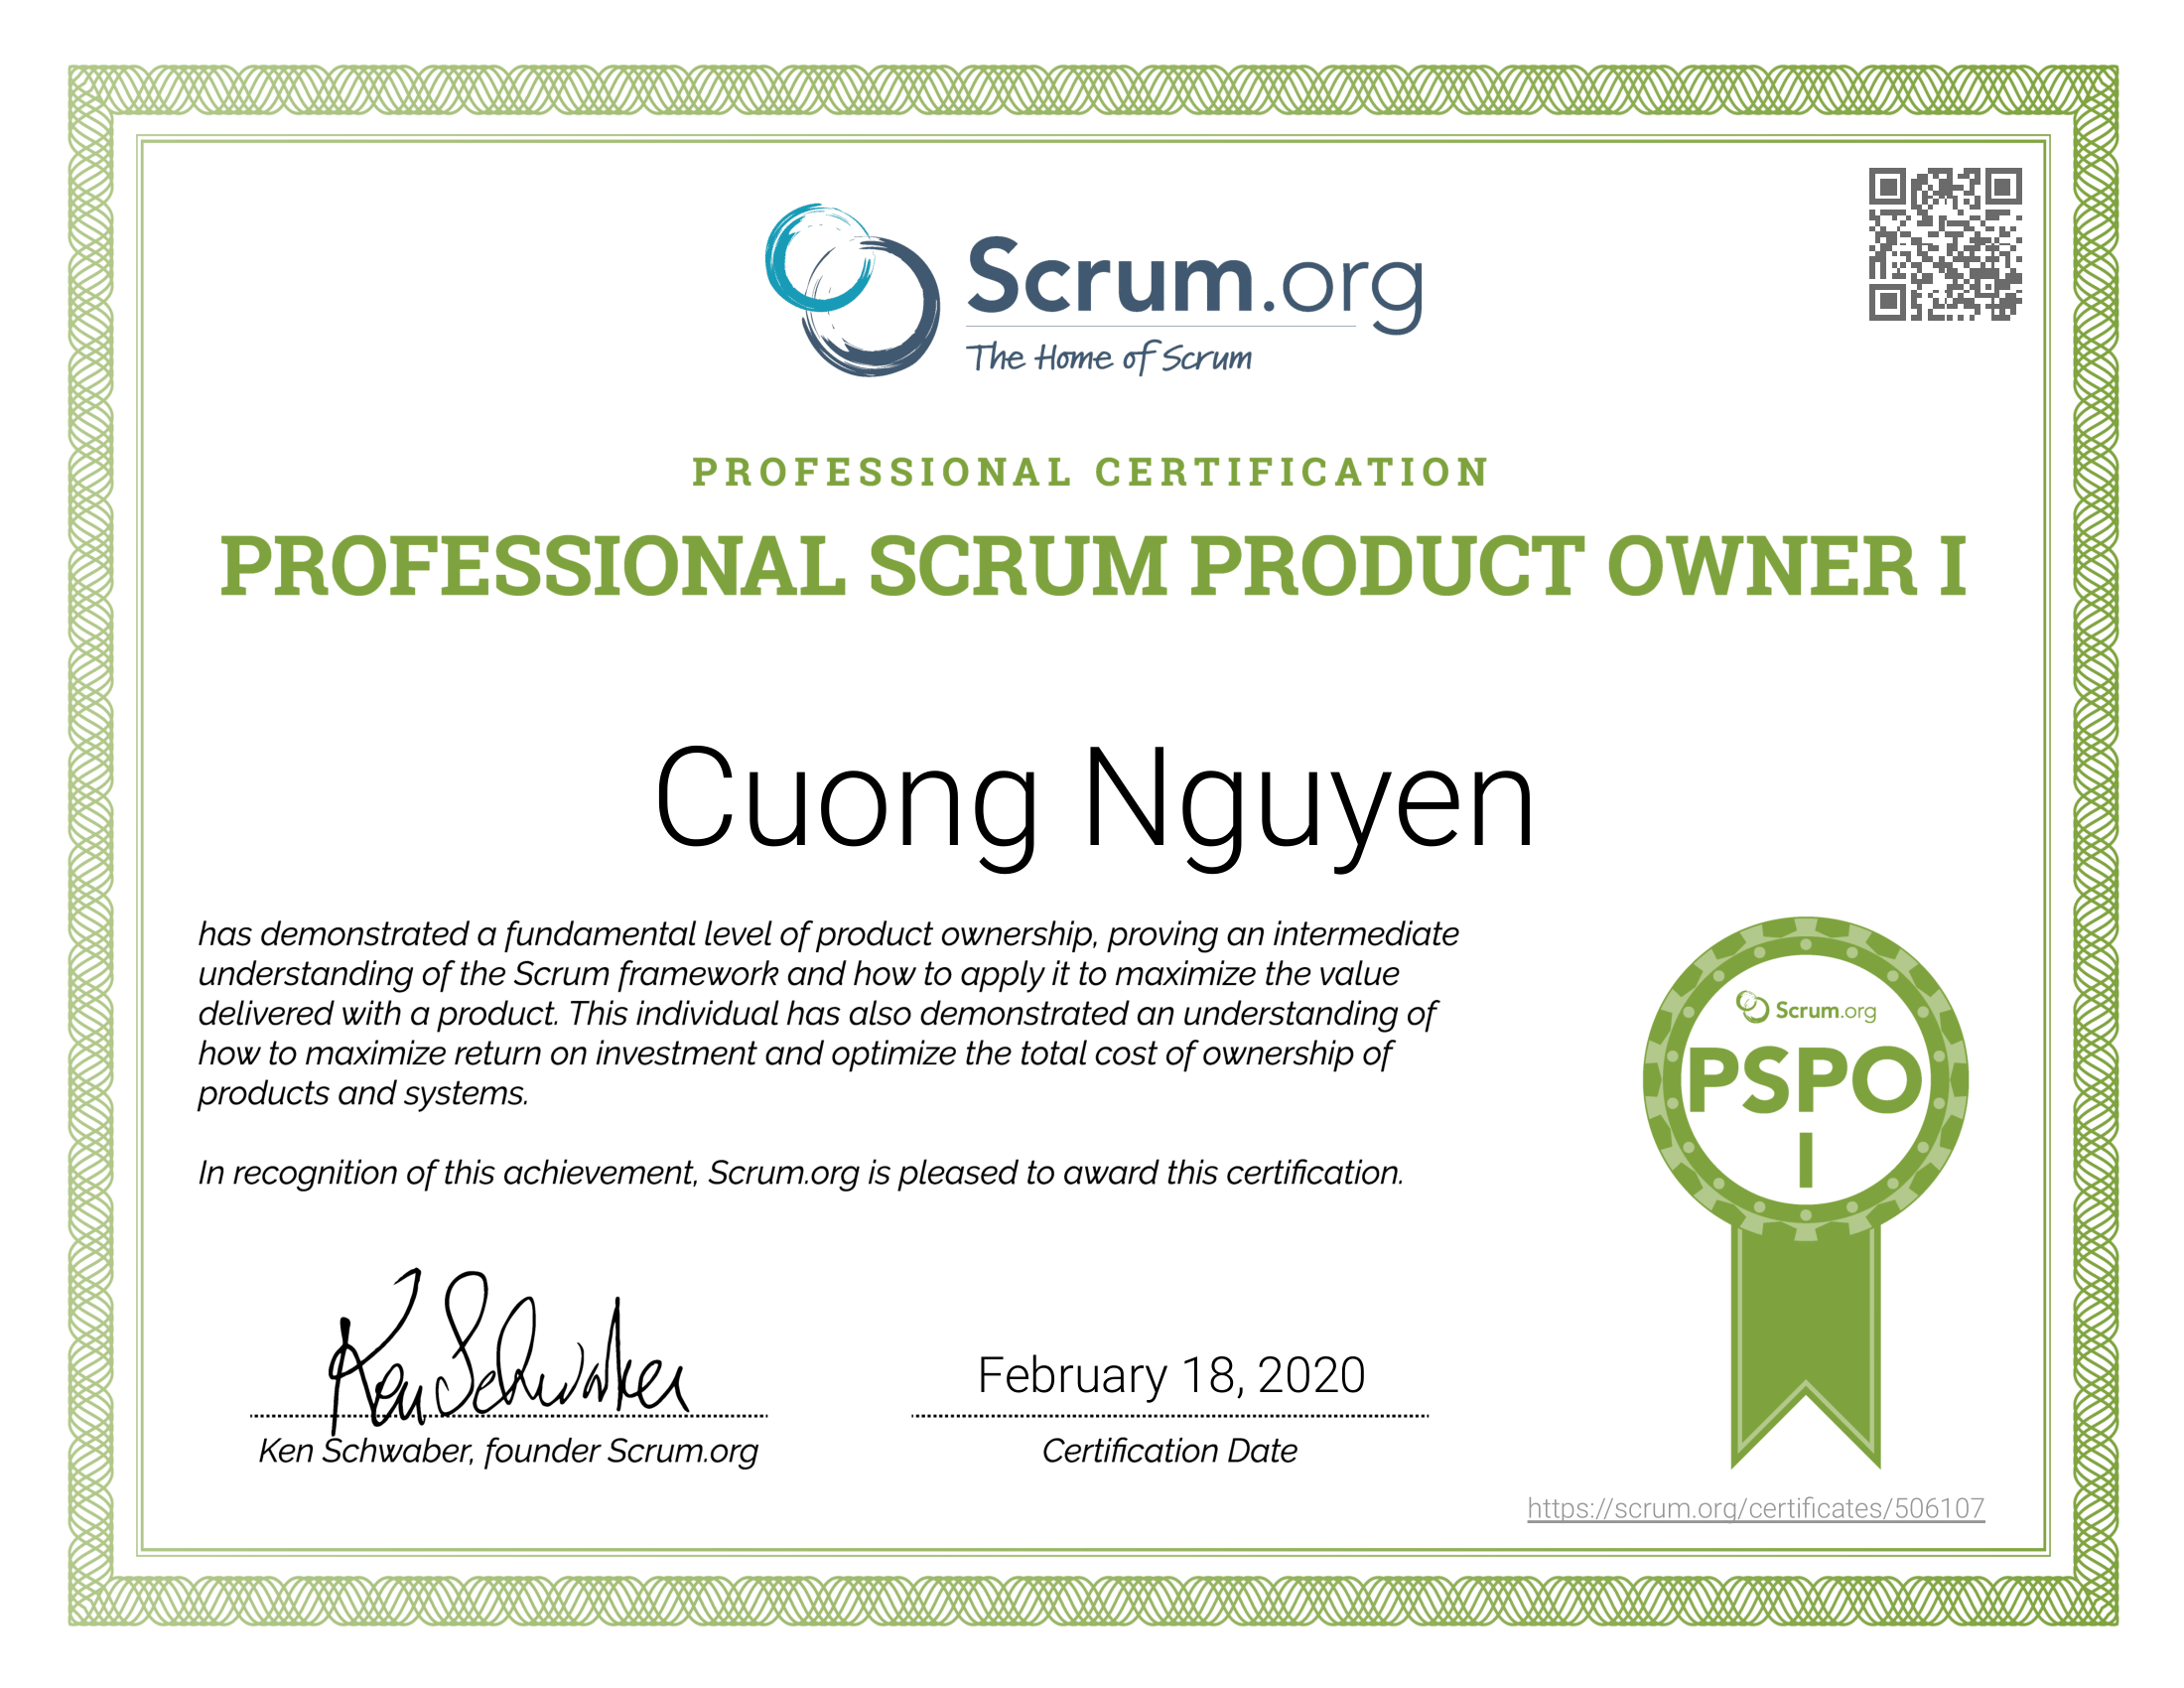 Kinh nghiệm ôn thi PSPO I (Professional Scrum Product Owner I)